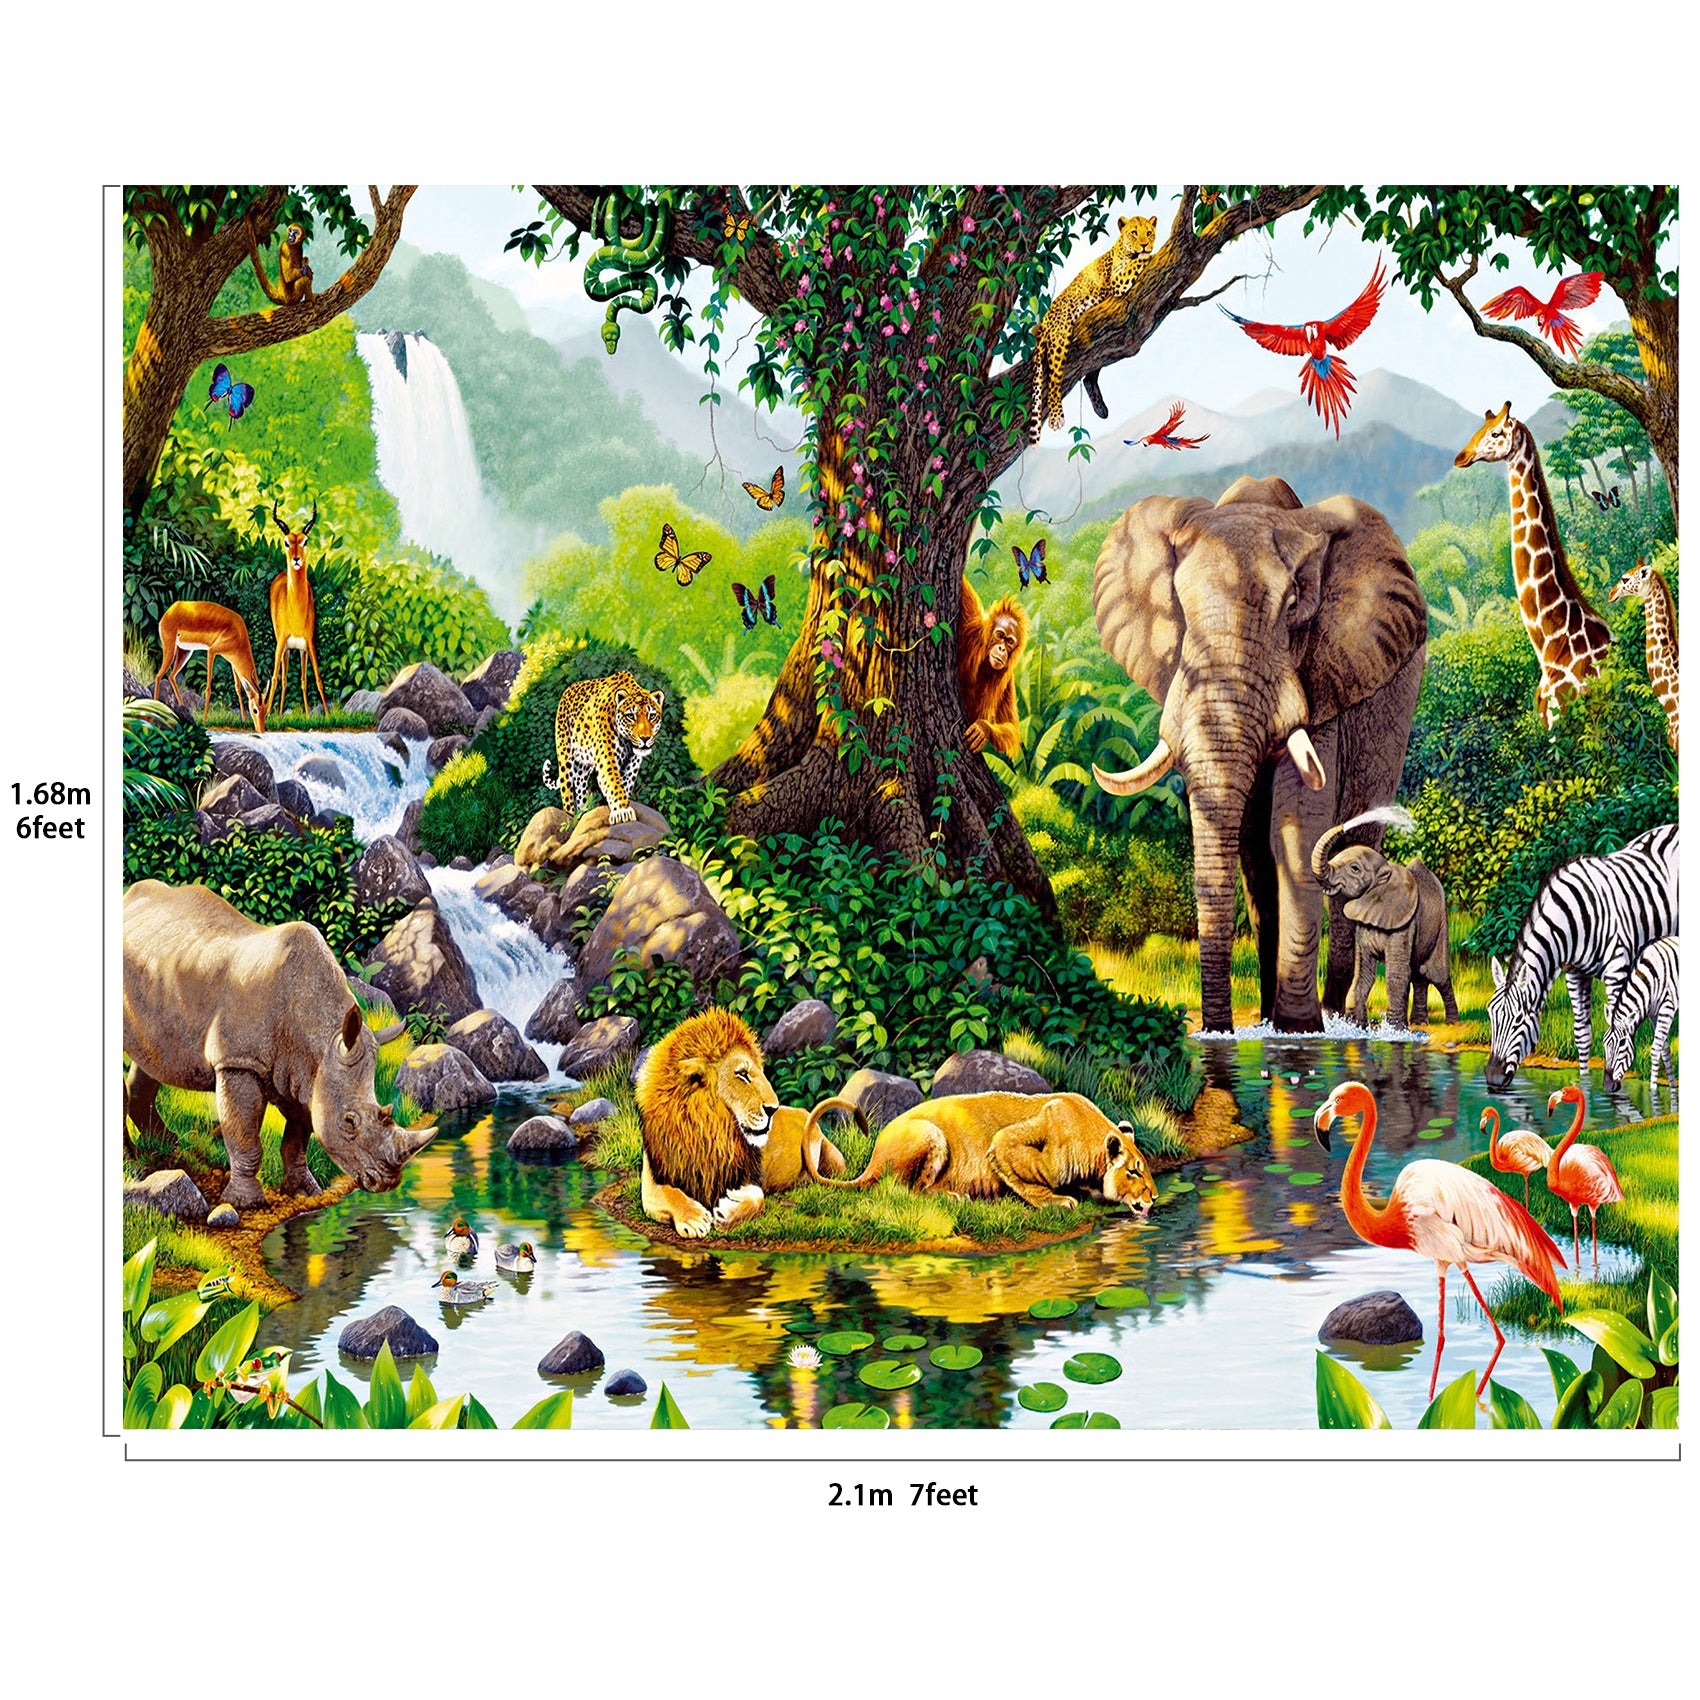 Tropical Rain Forest Jungle Adventure Backdrop Photography Studio Fabric Background 7x6feet #2192